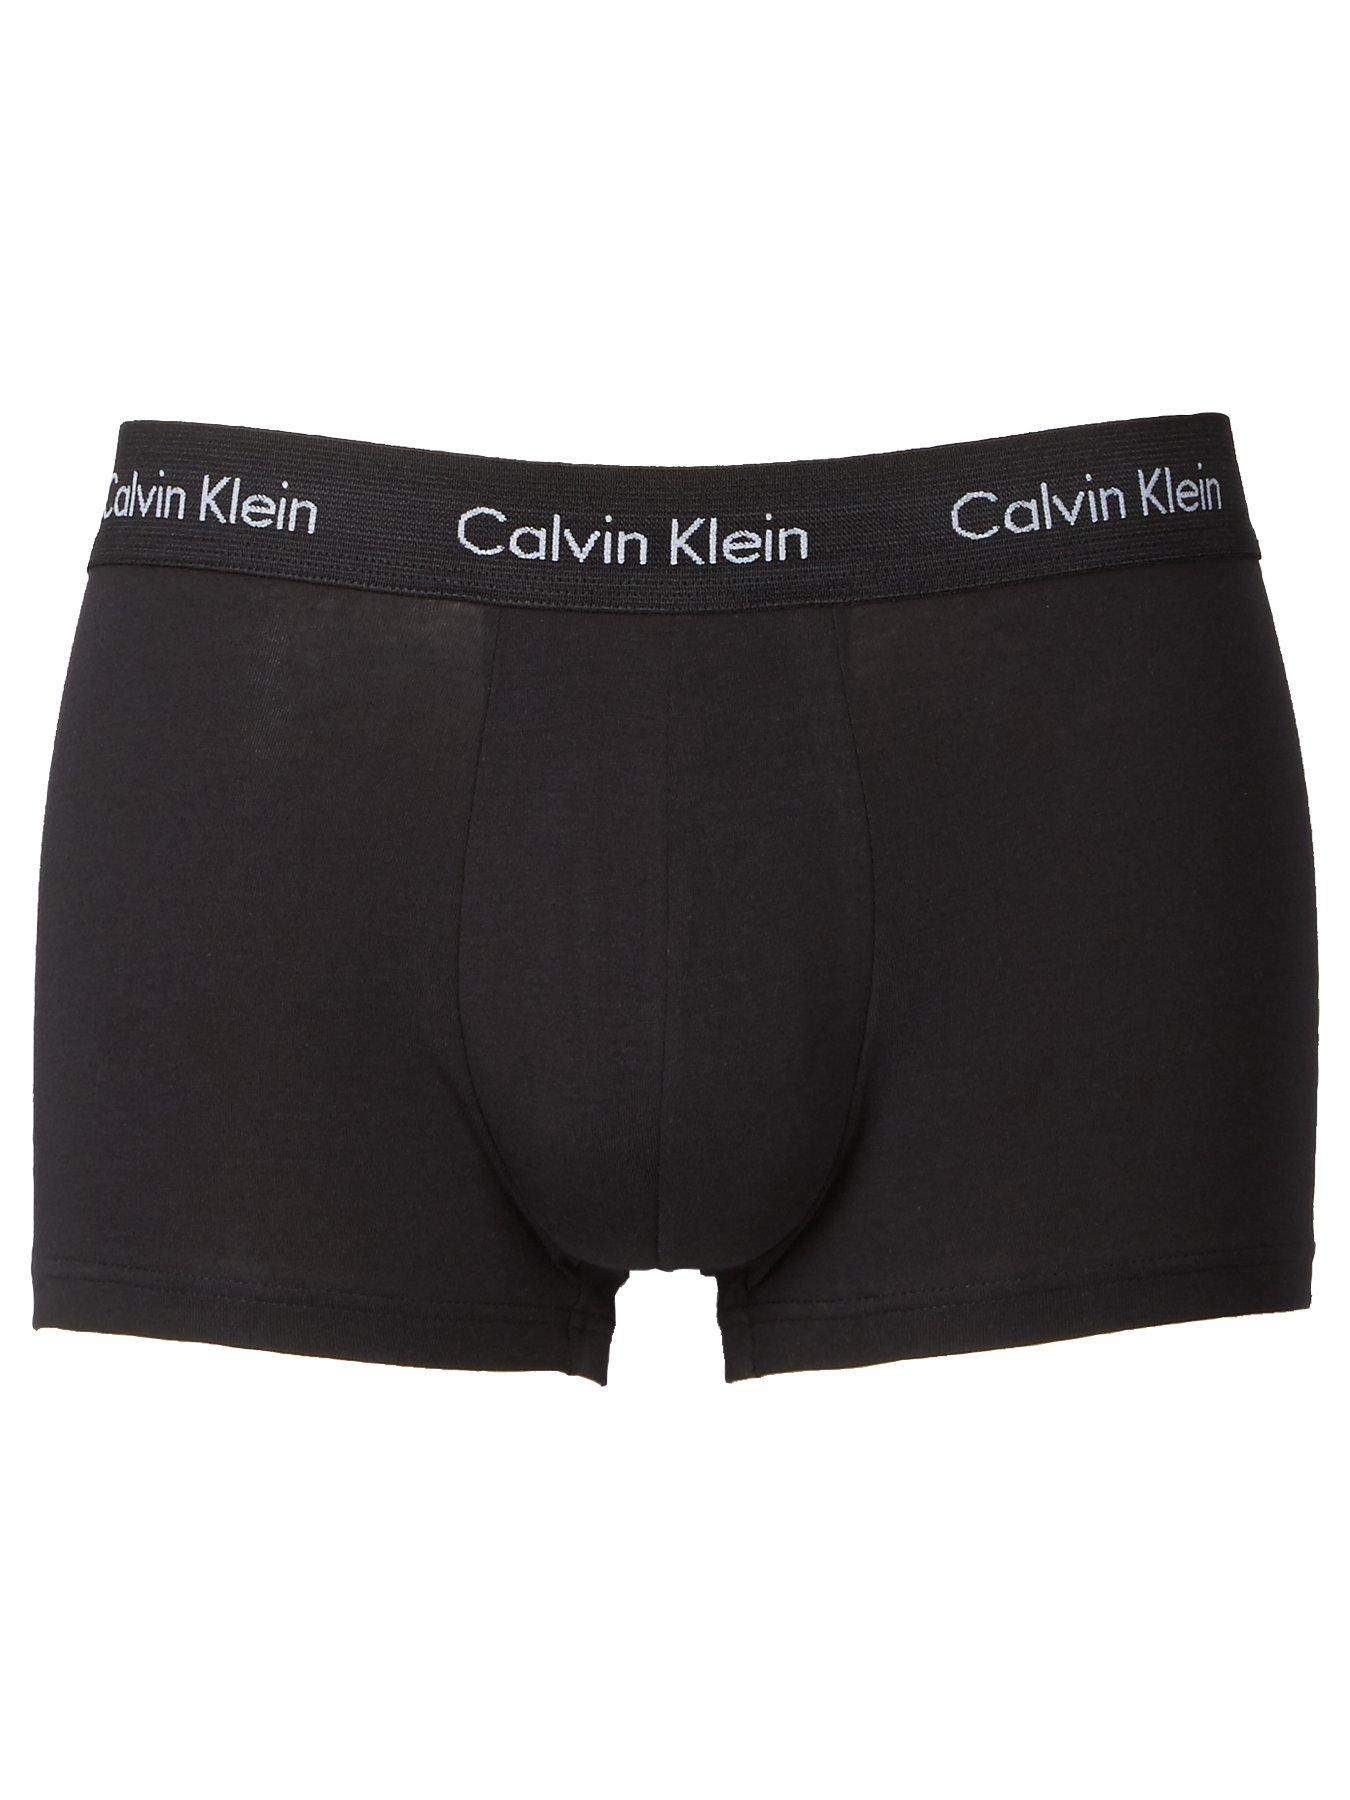 Calvin Klein 3 Pack Low Rise Trunks - Black | littlewoods.com